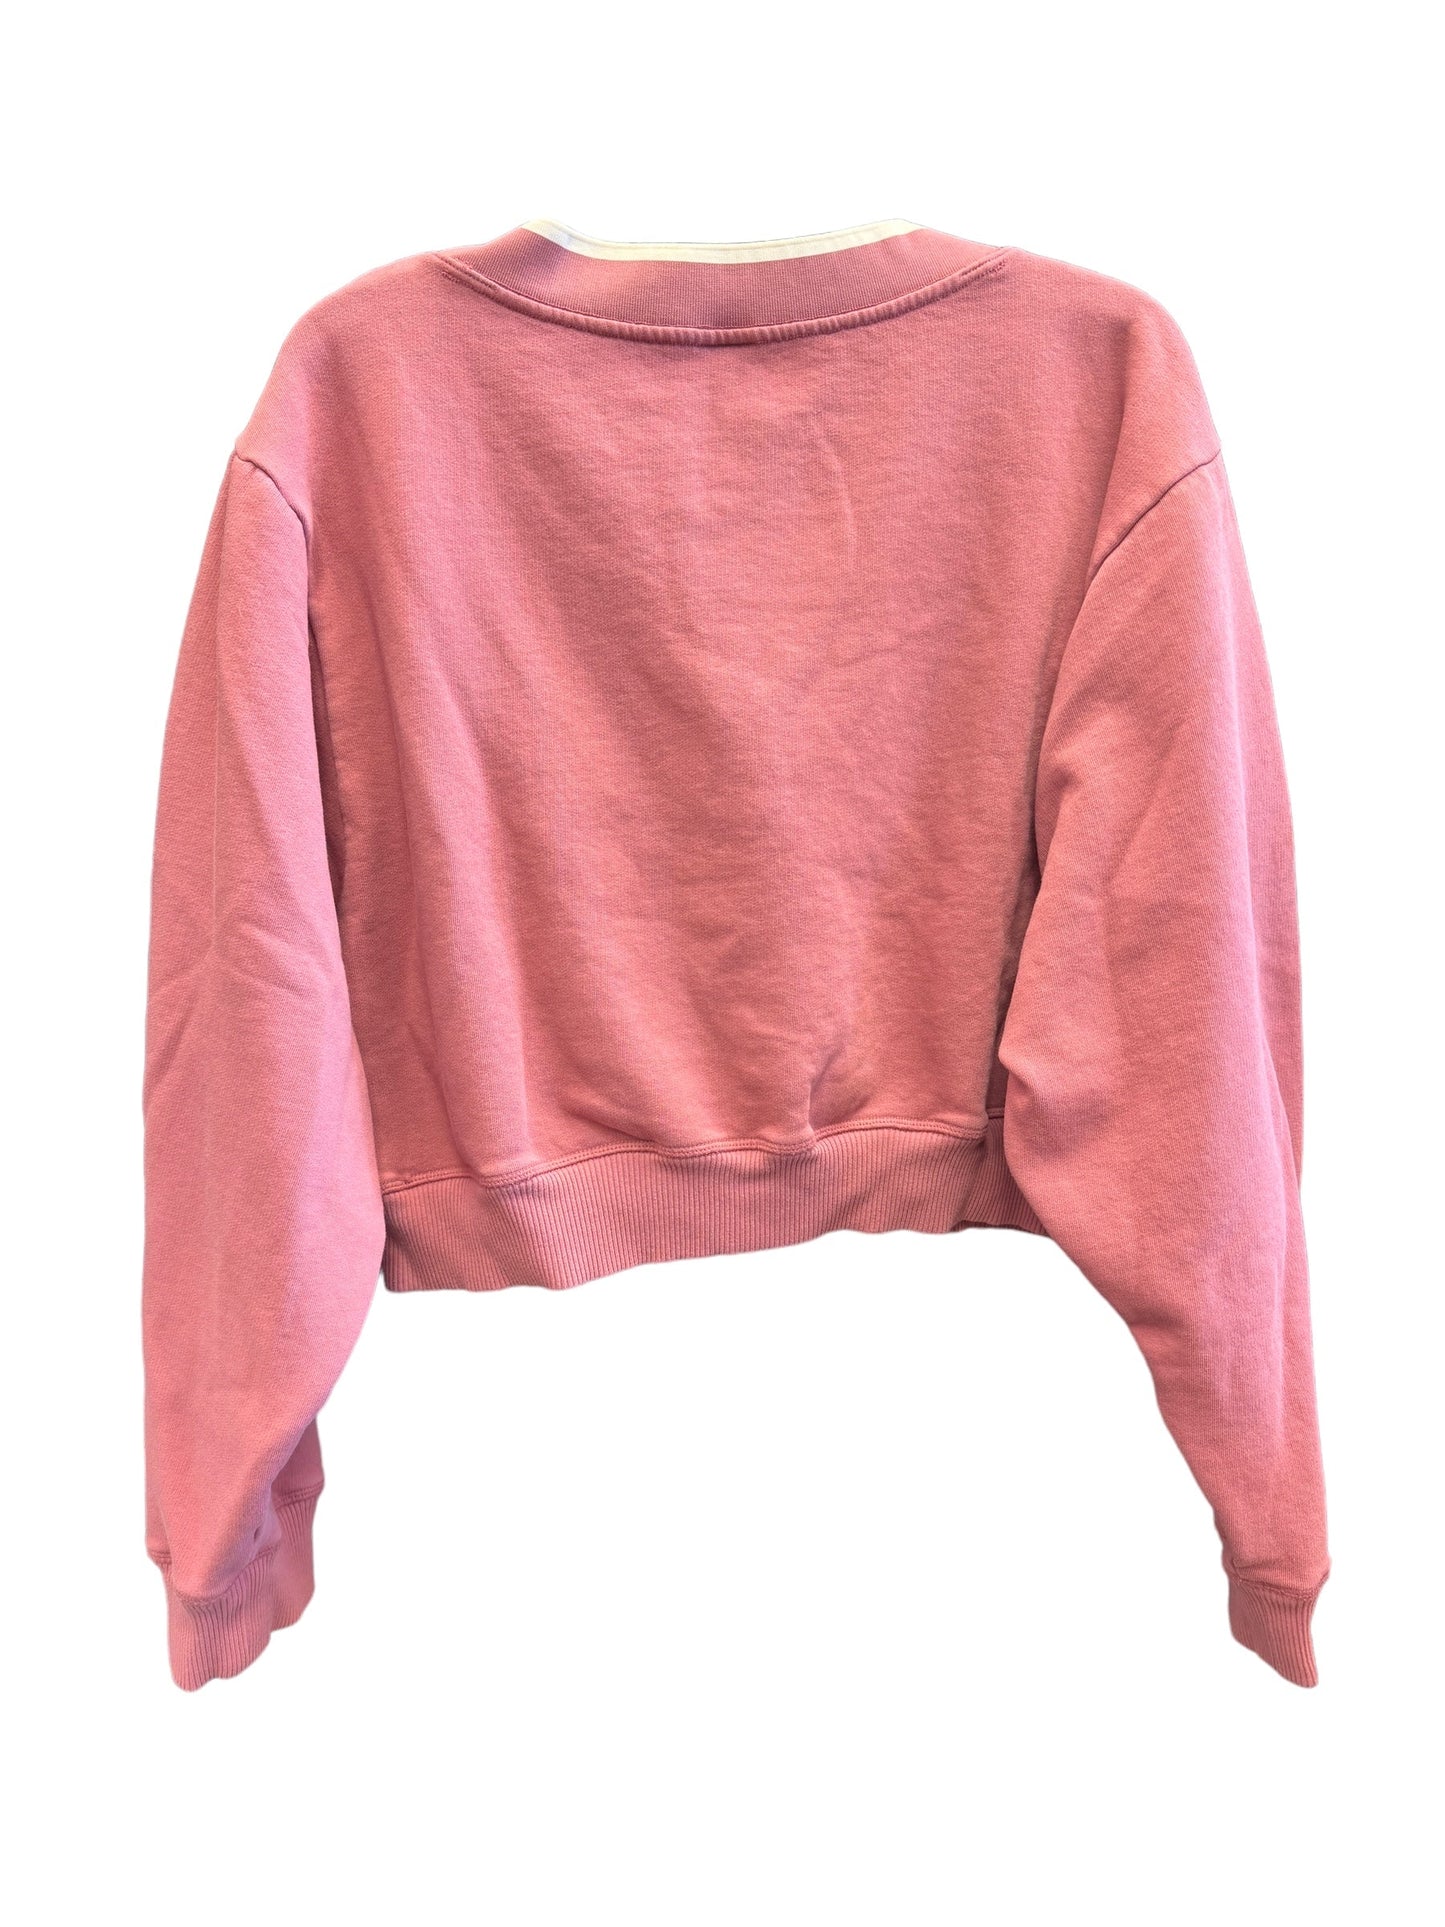 Athletic Sweatshirt Crewneck By Pink  Size: Xl